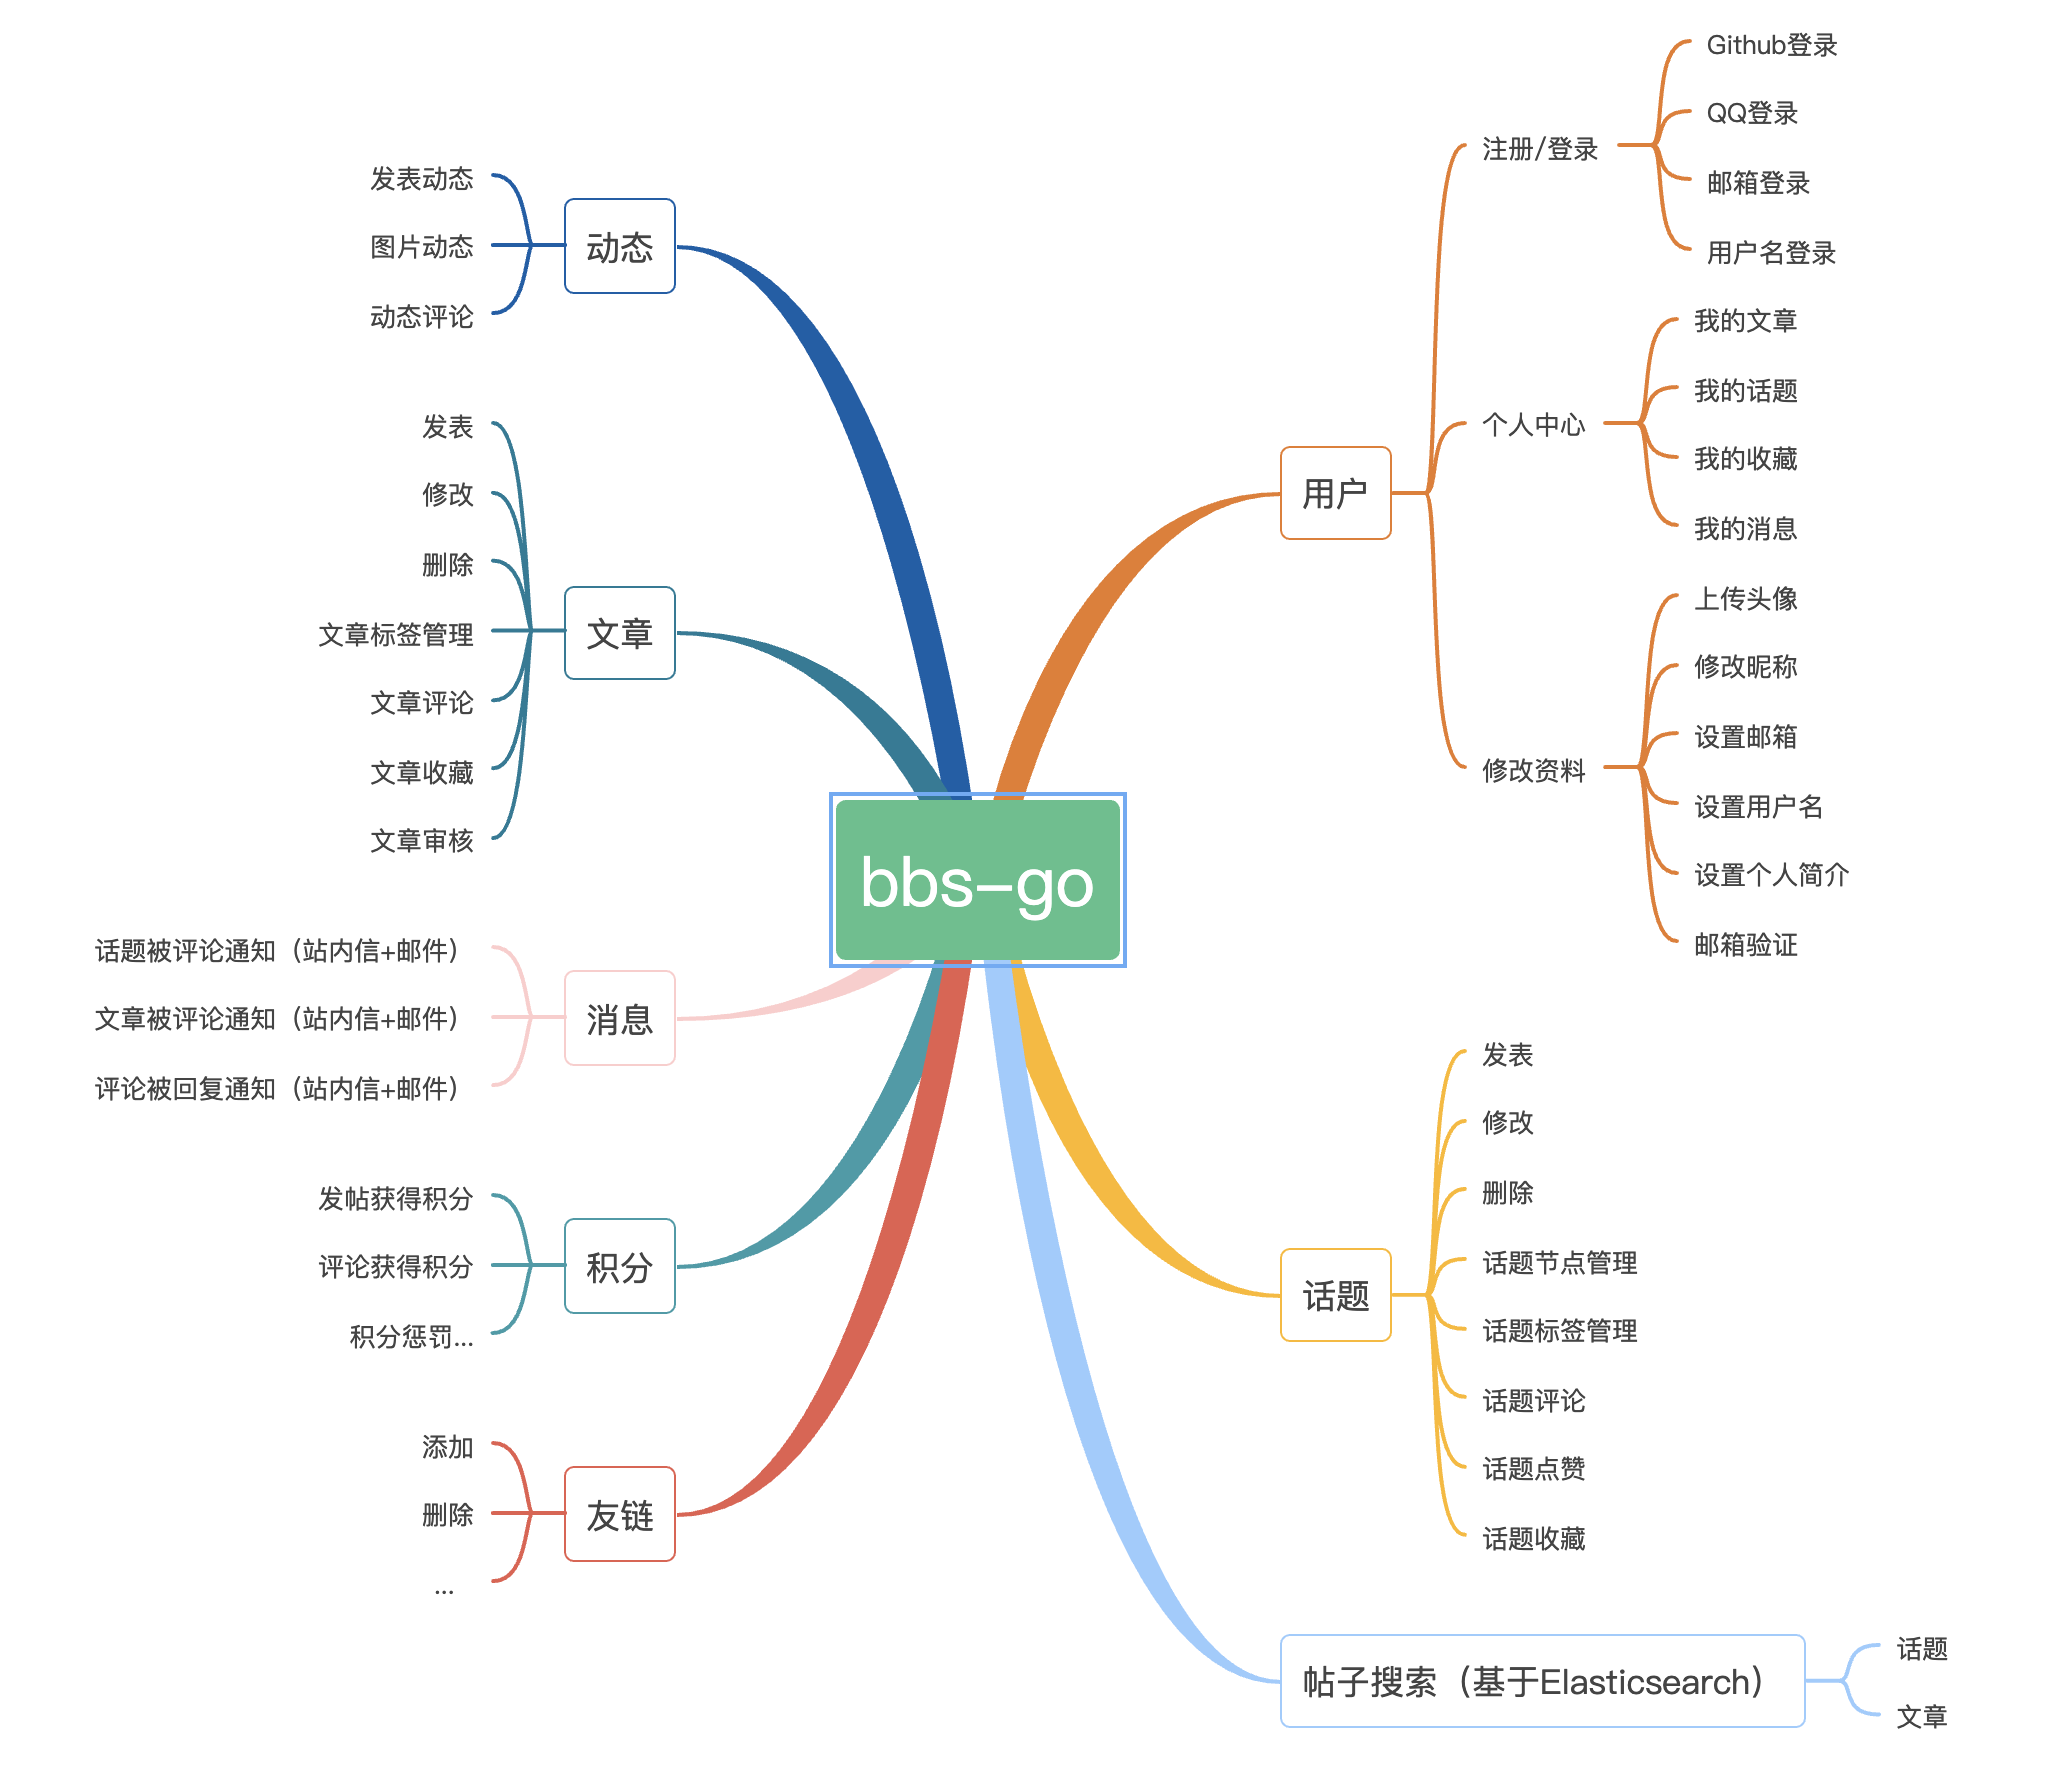 Go 语言开源社区系统 BBS-GO 3.2.5 发布，系统重构+多处 BUG 修复